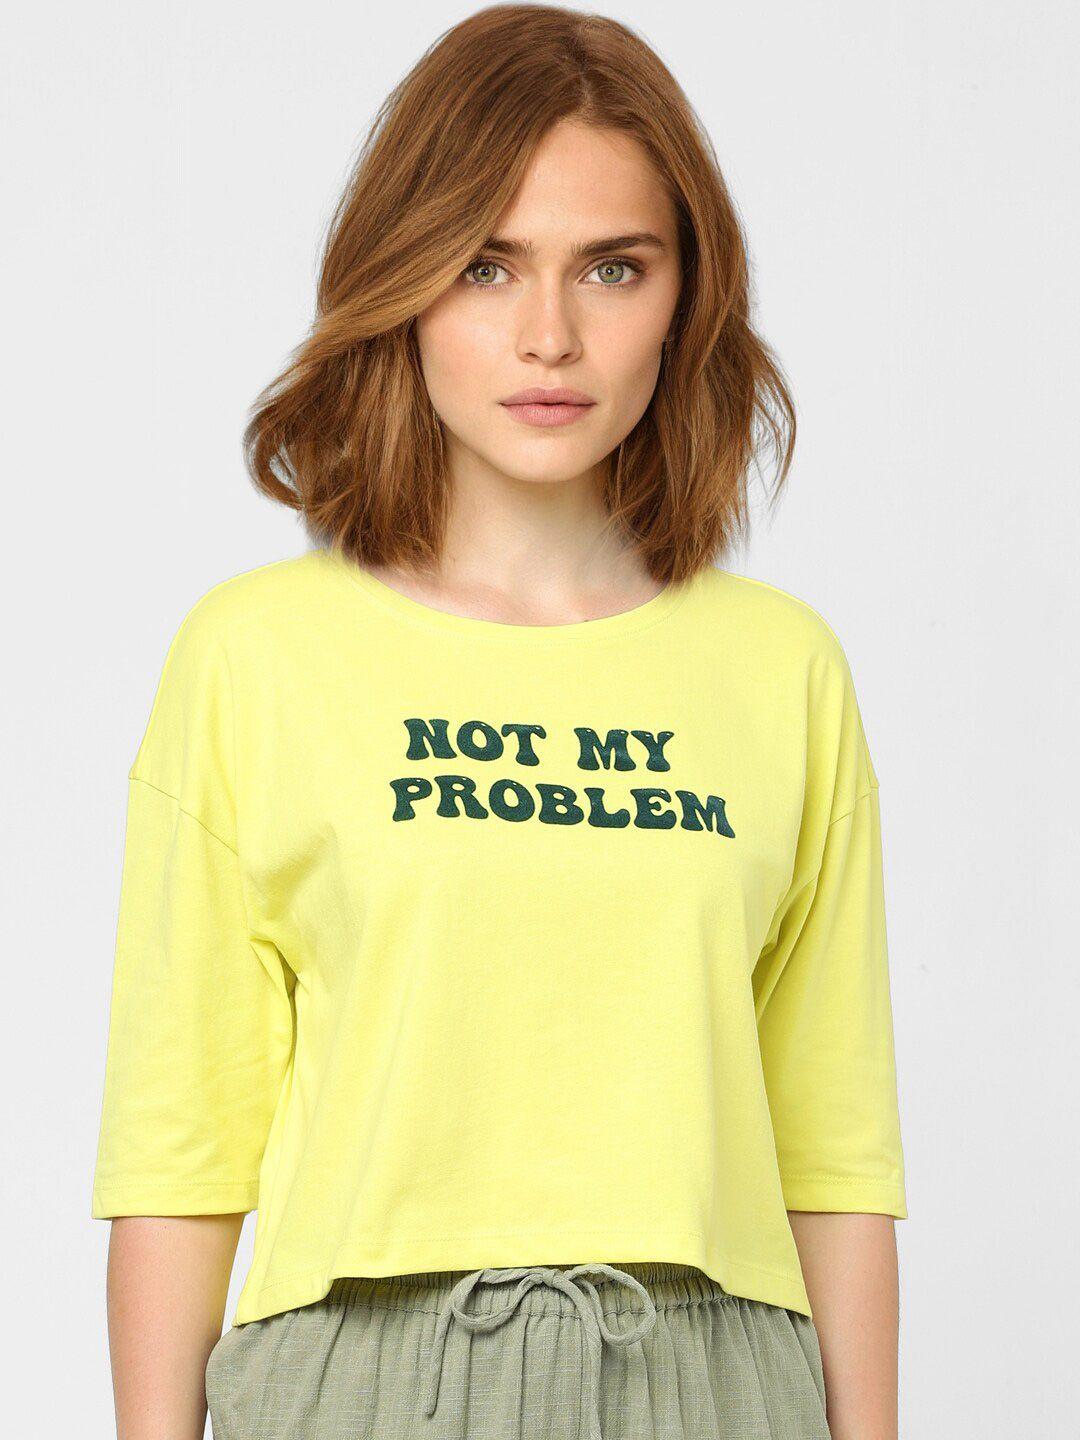 vero moda women yellow & green typography printed drop-shoulder sleeves cotton t-shirt